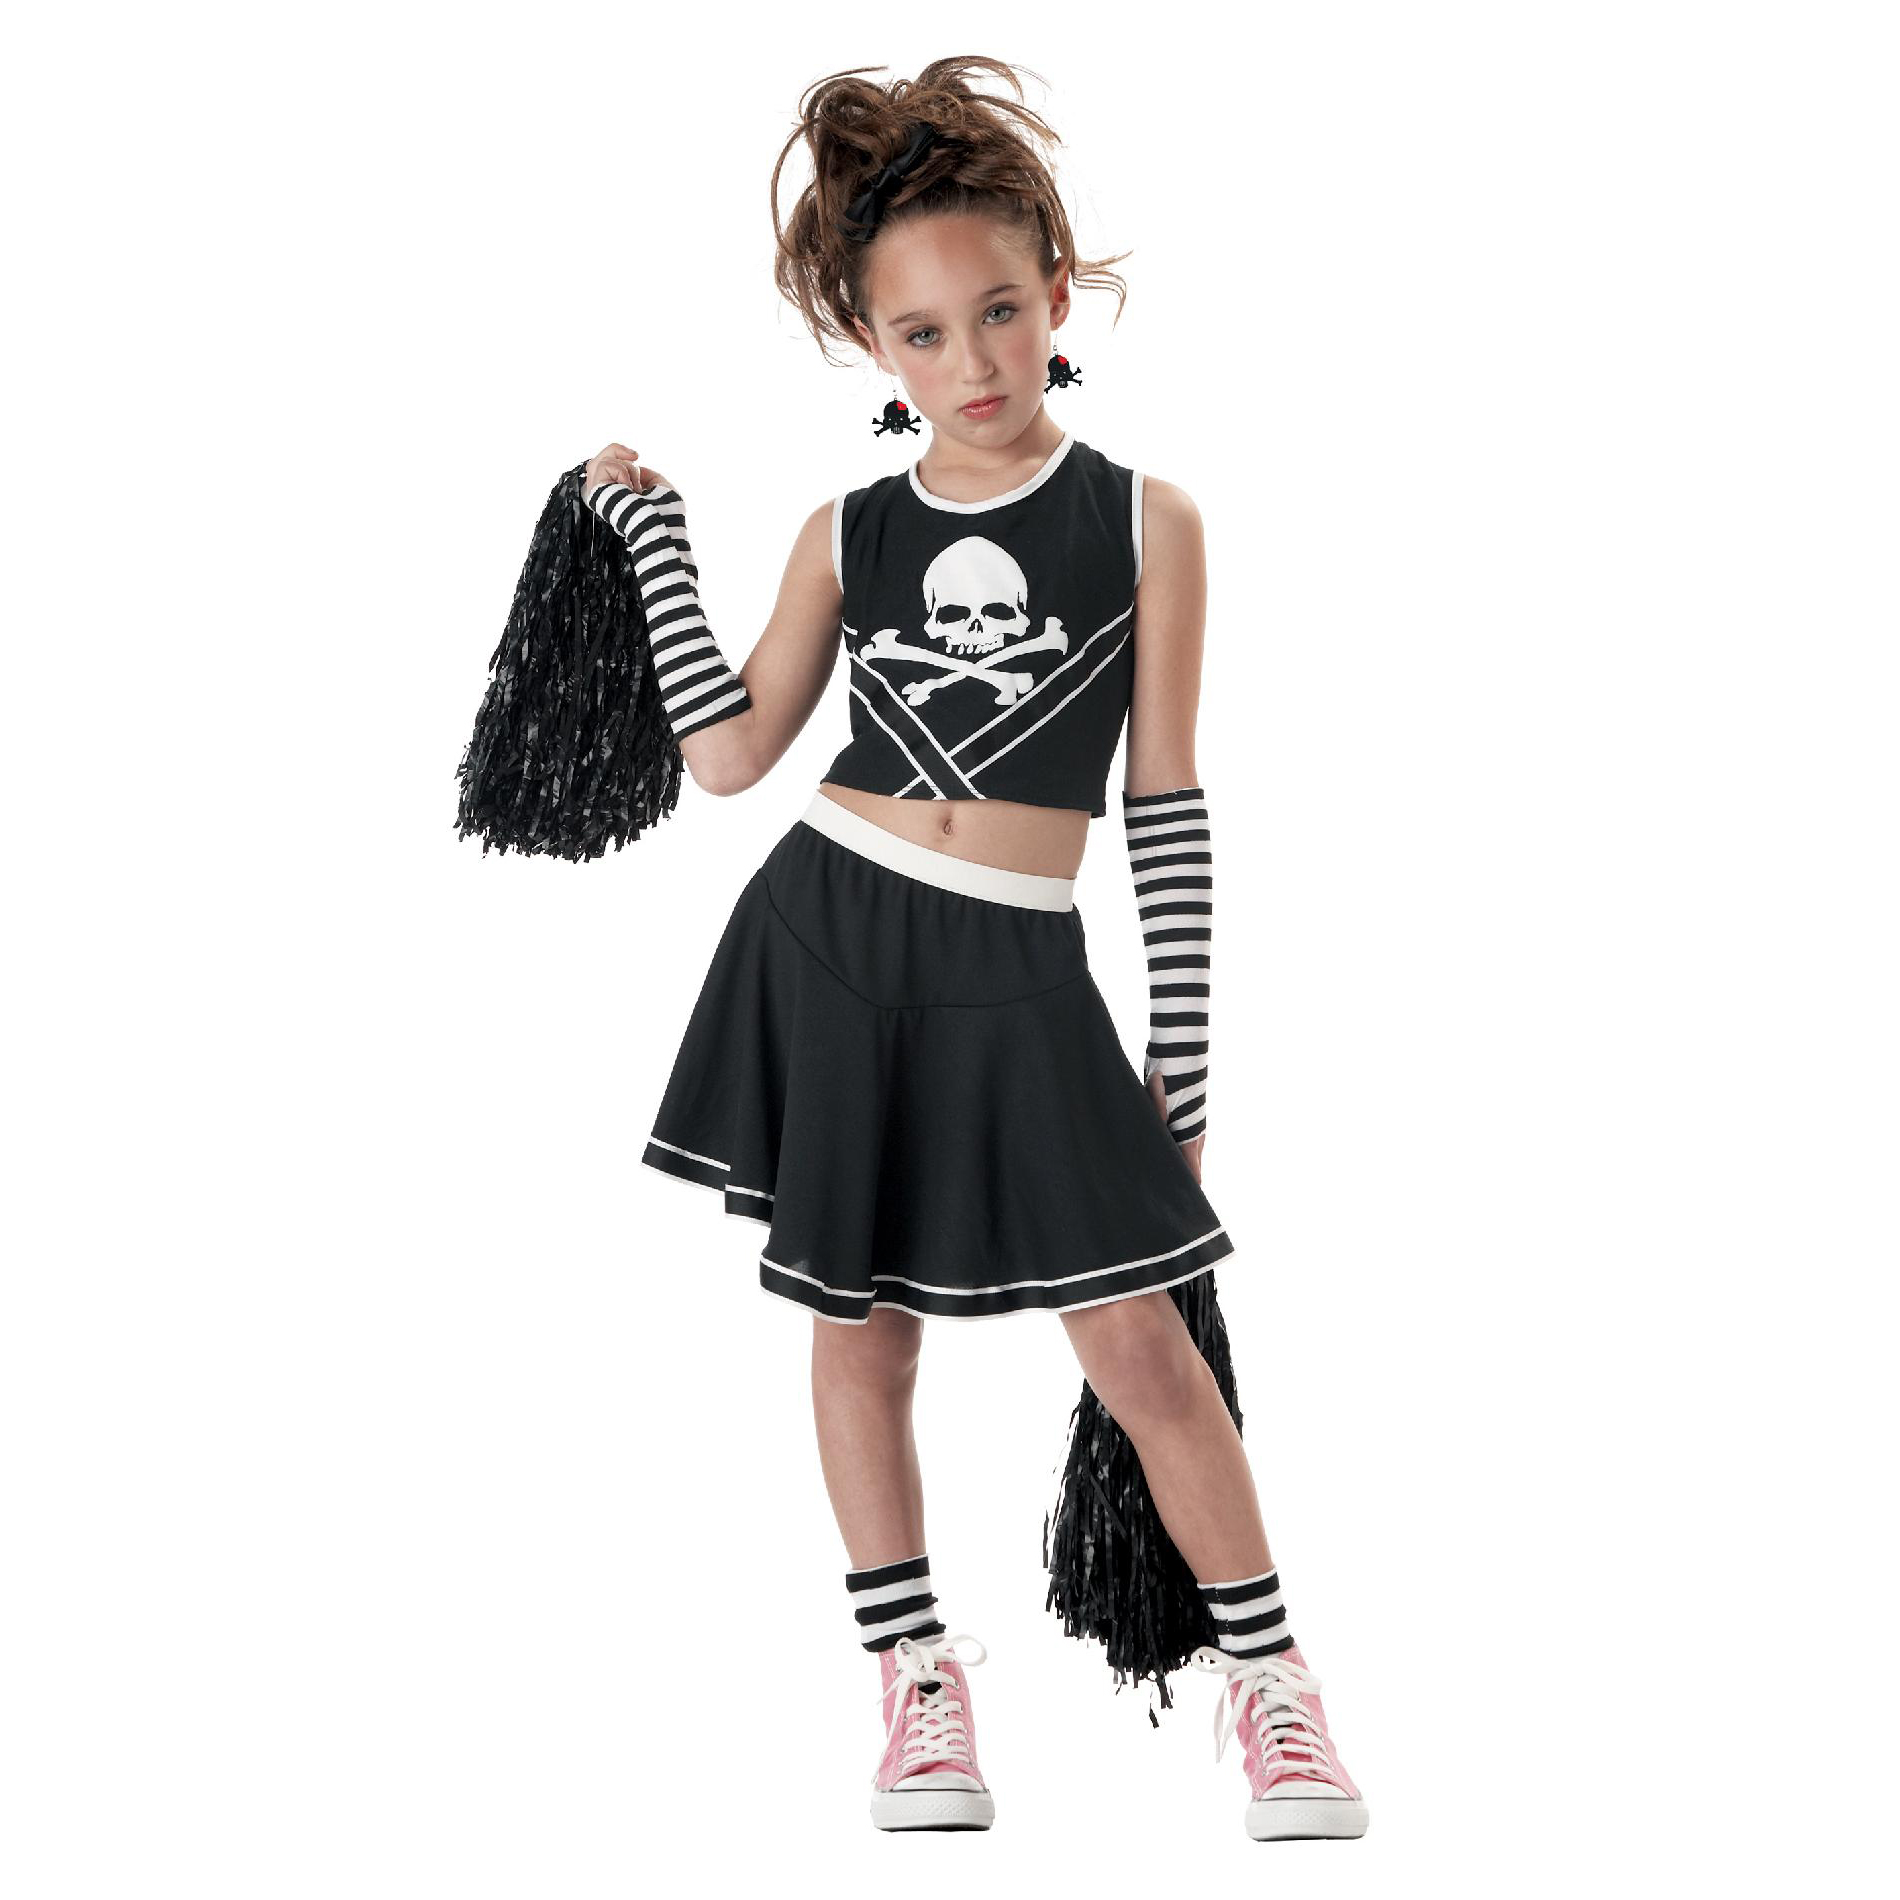 Totally Ghoul Punk Cheerleader Girls' Halloween Costume